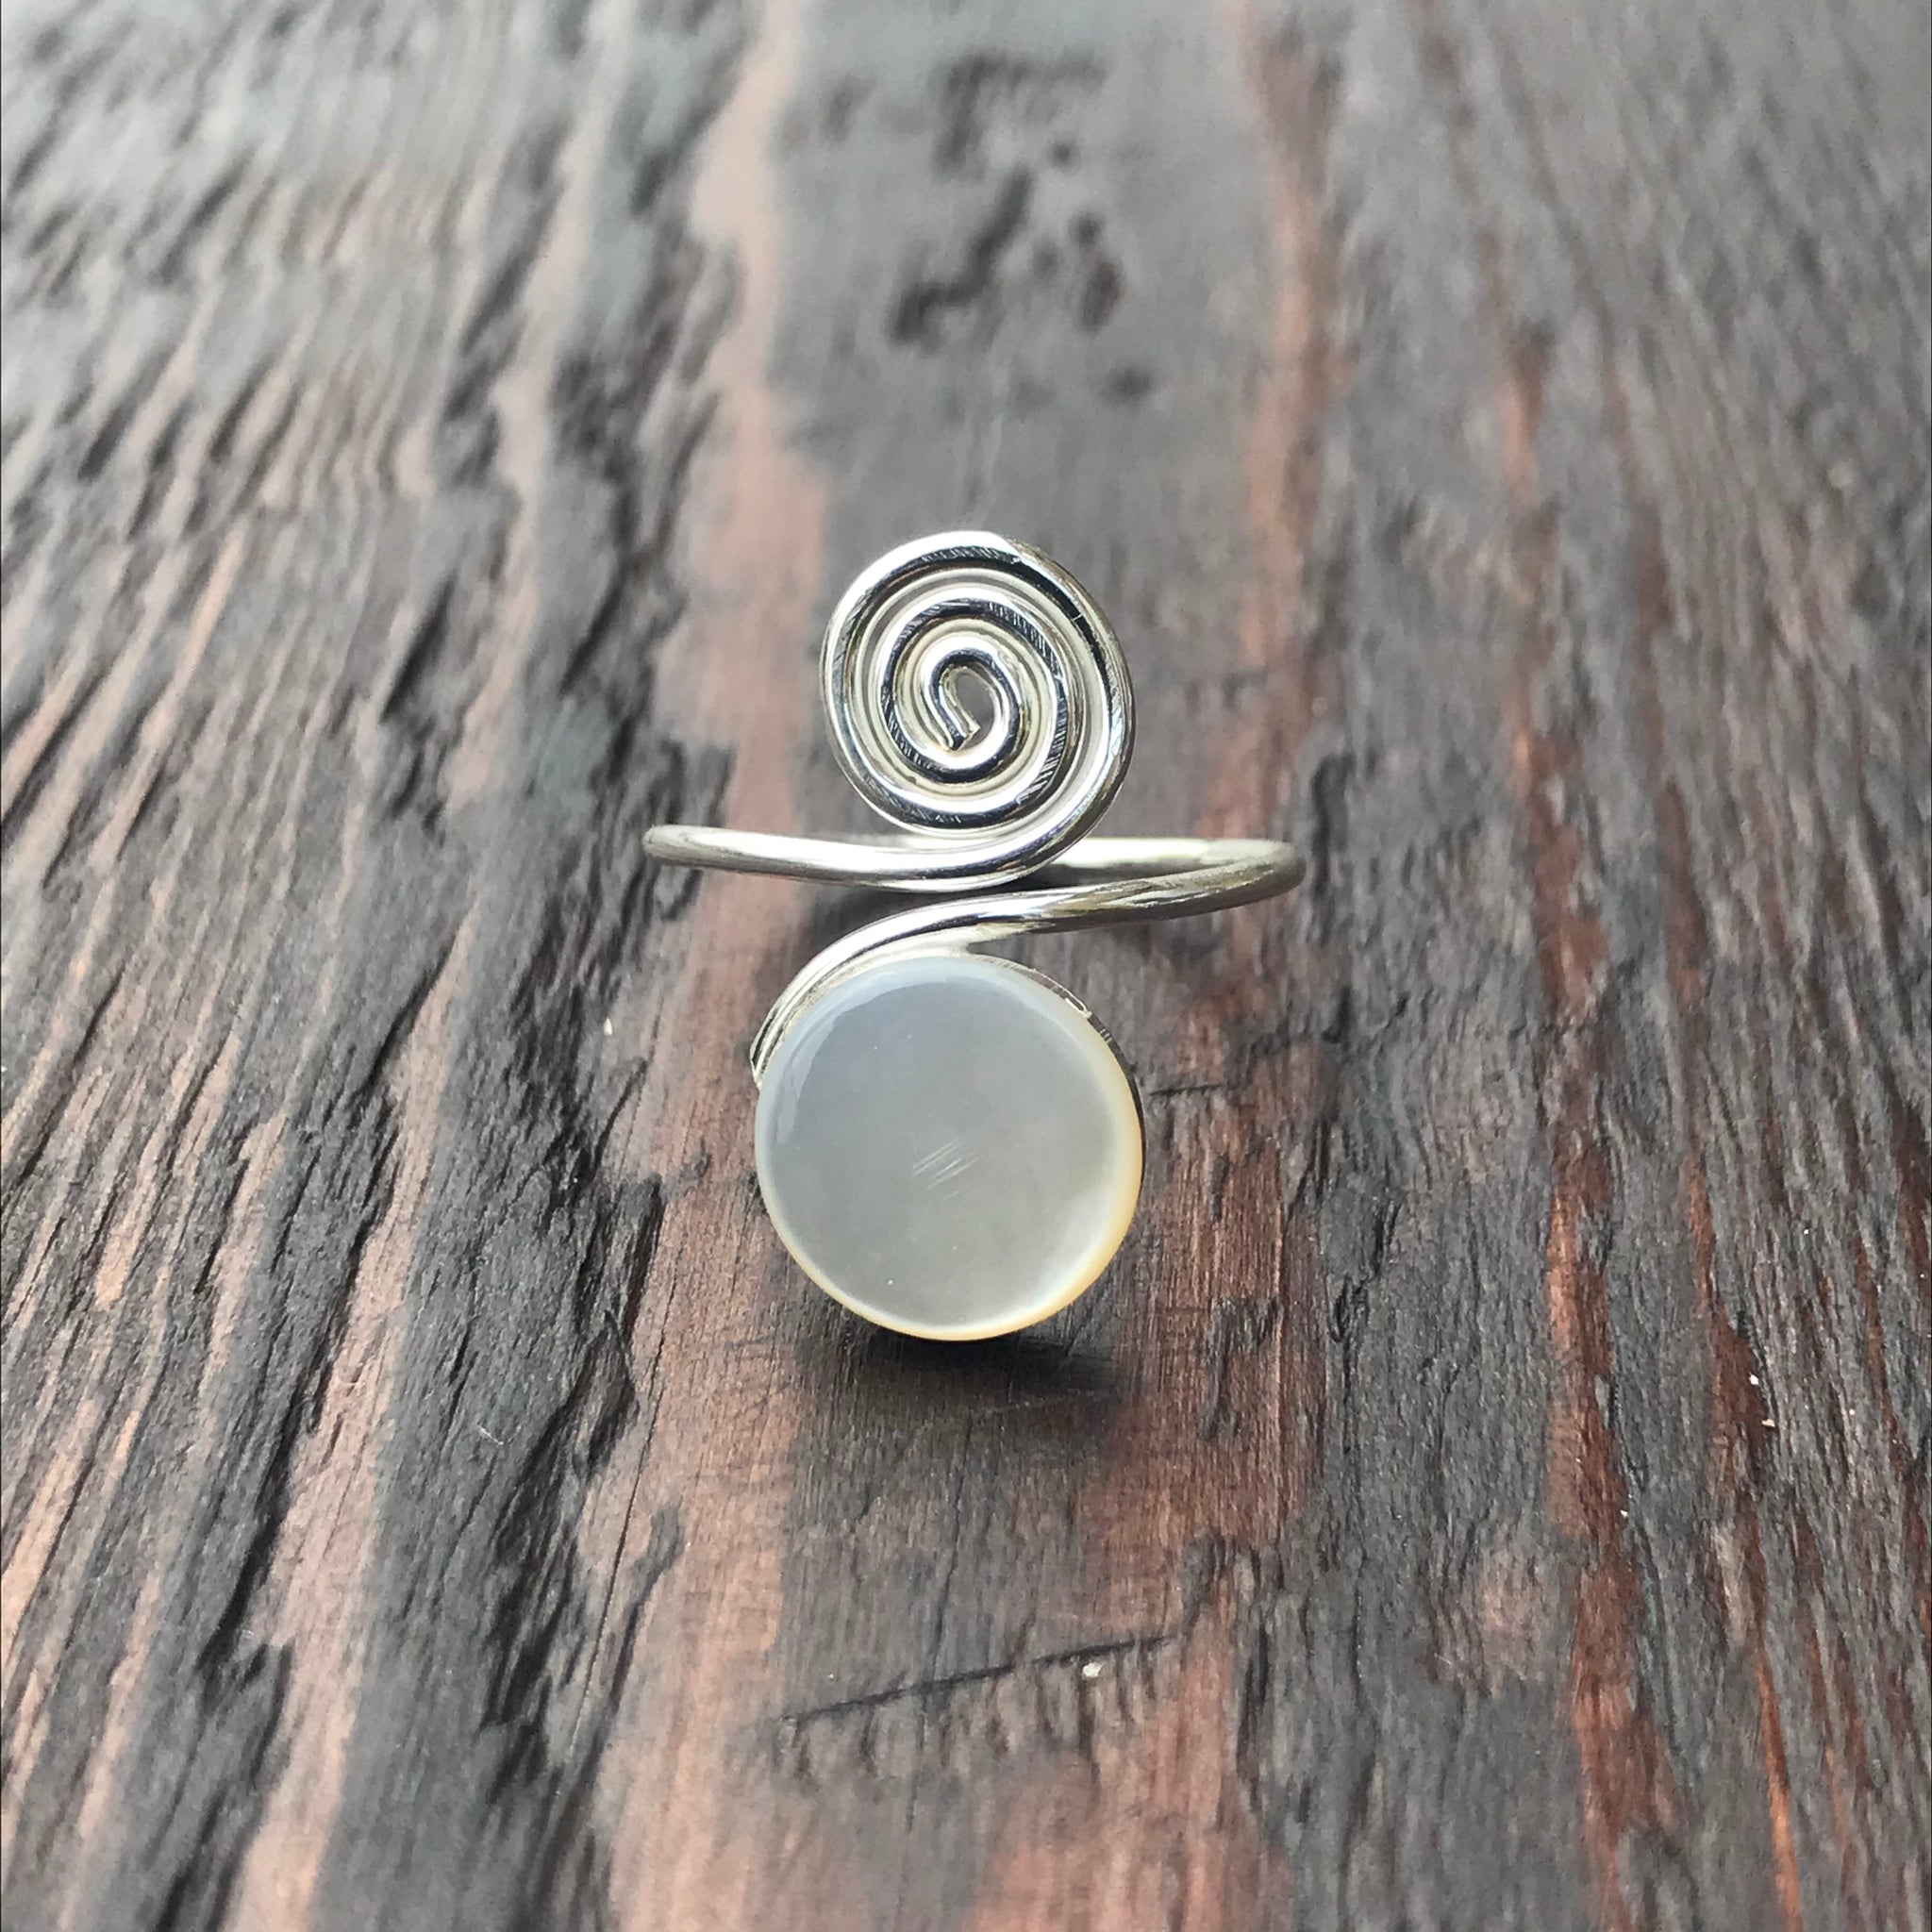 Mother of Pearl Spiral Design Sterling Silver Ring - Adjustable